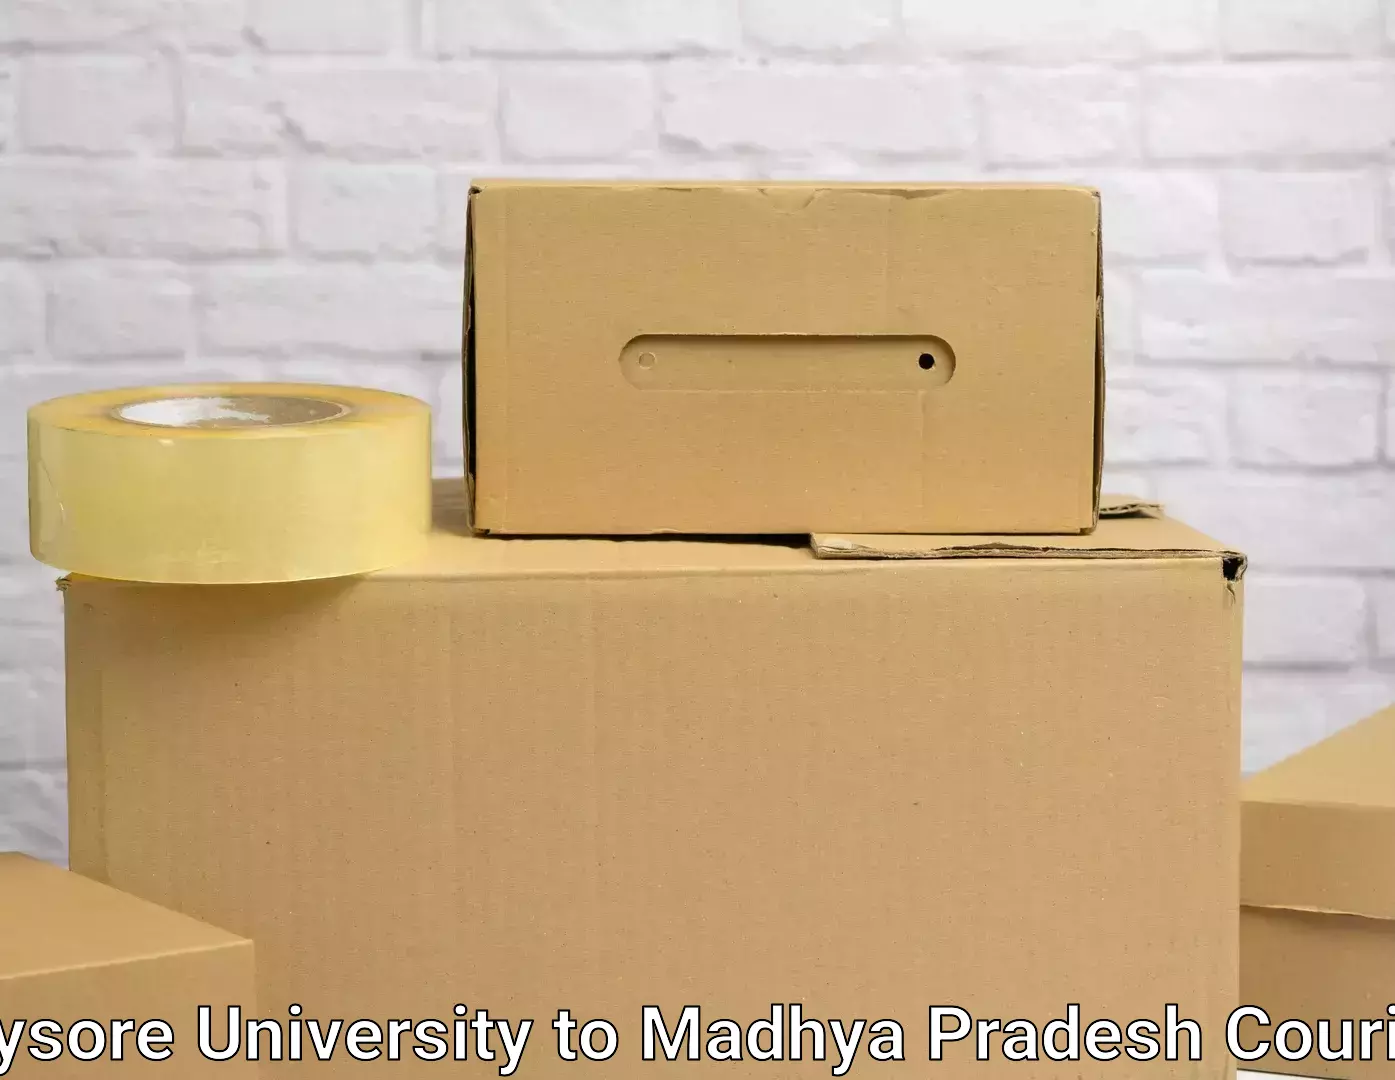 Trusted relocation services Mysore University to Mundi